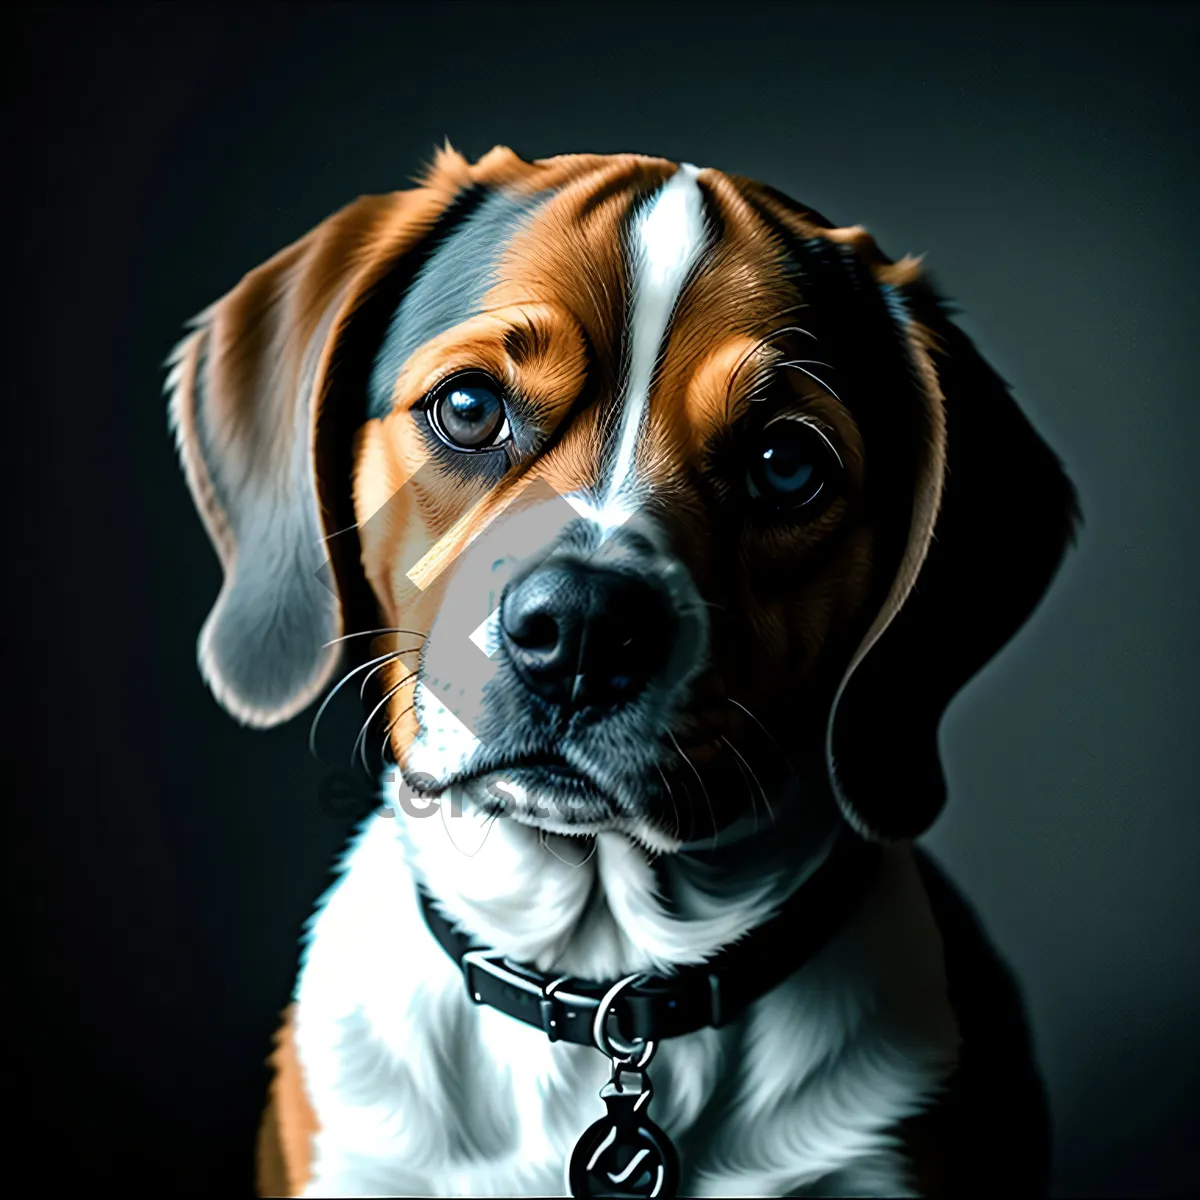 Picture of Adorable Beagle Puppy with Black Collar - Studio Portrait